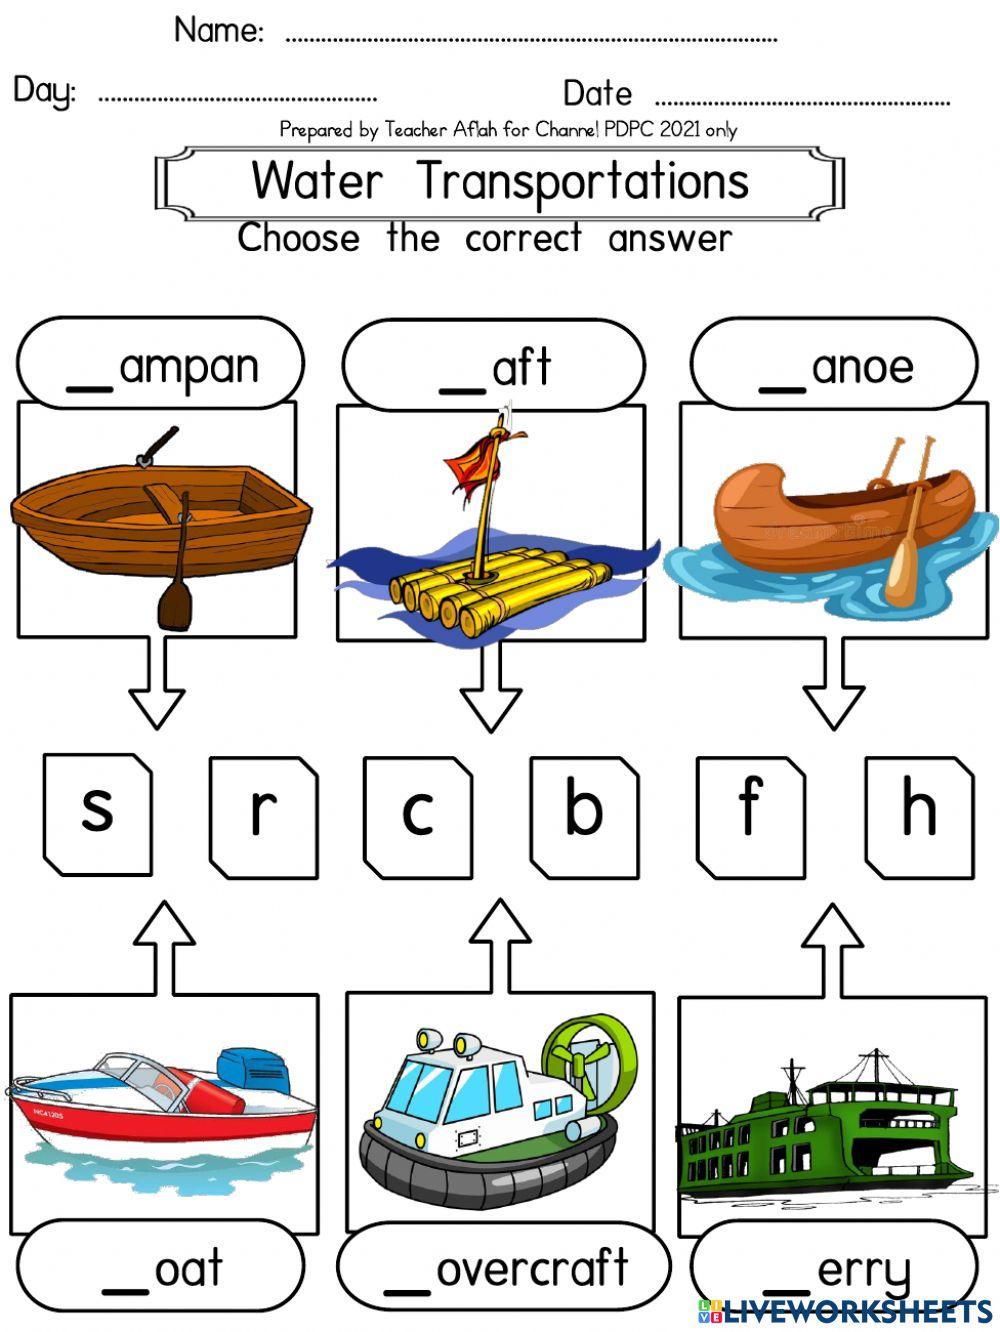 Water transportations